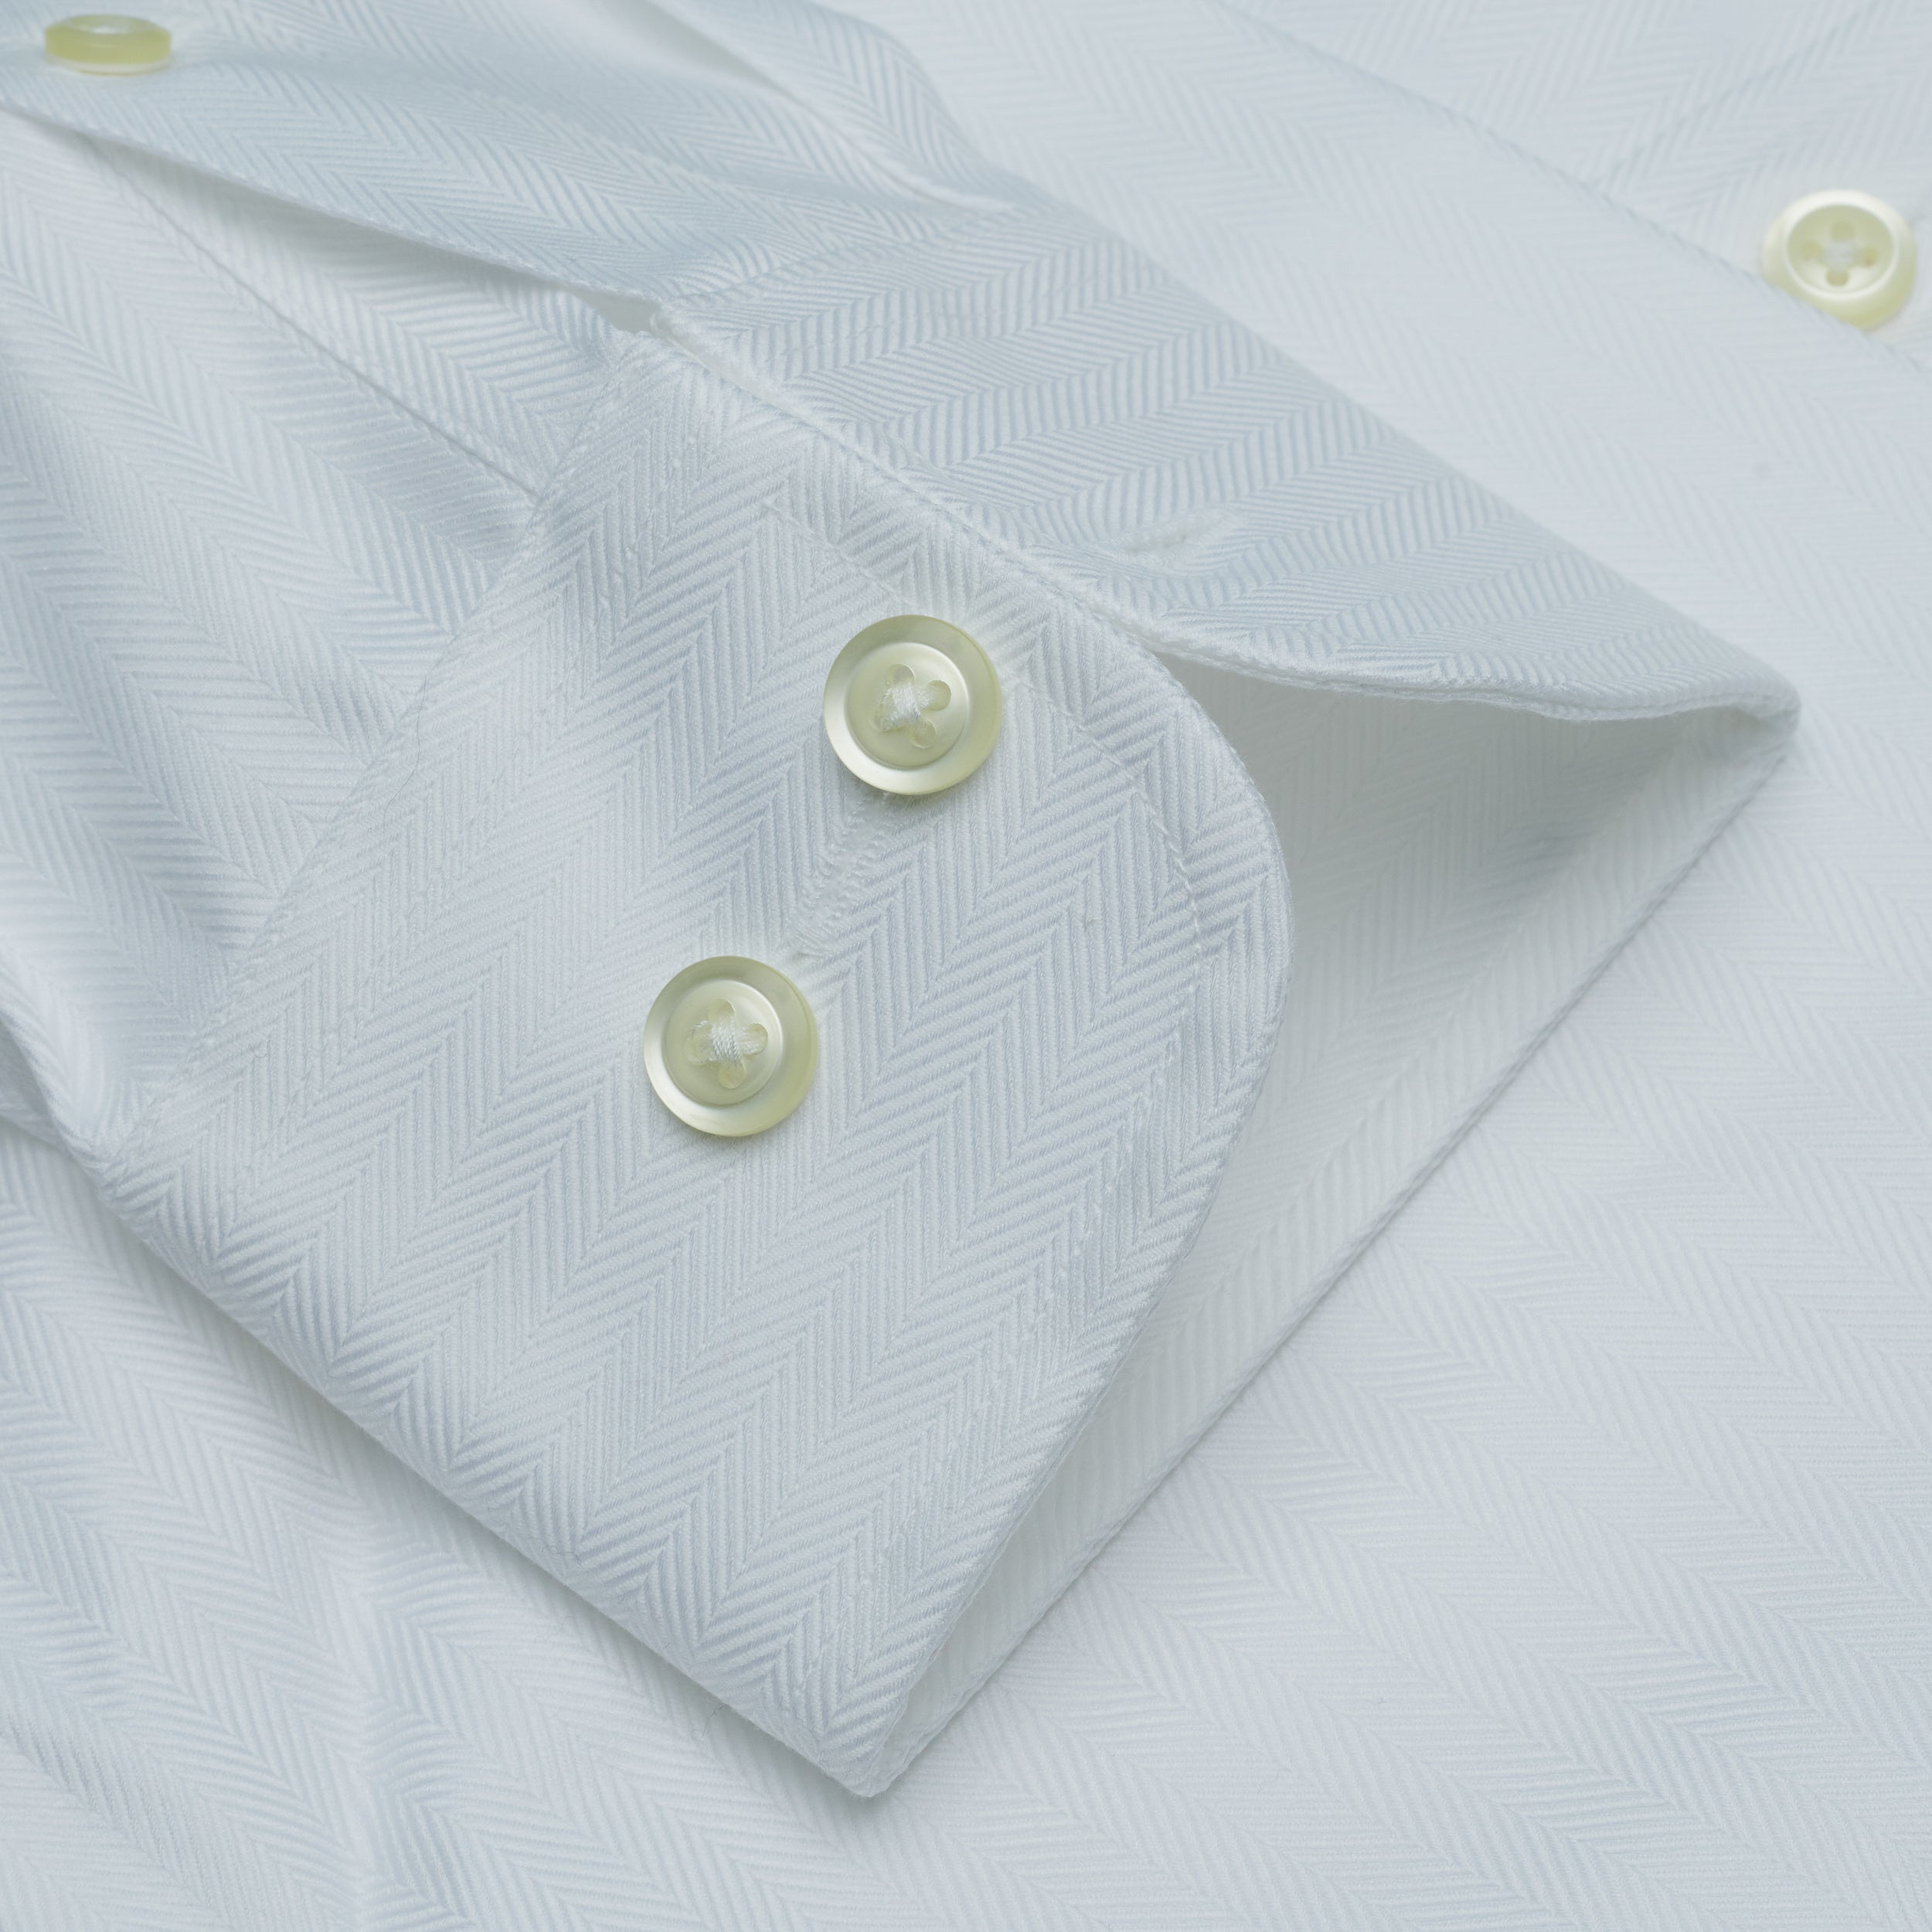 008 TF SC - White Herringbone Tailored Fit Spread Collar